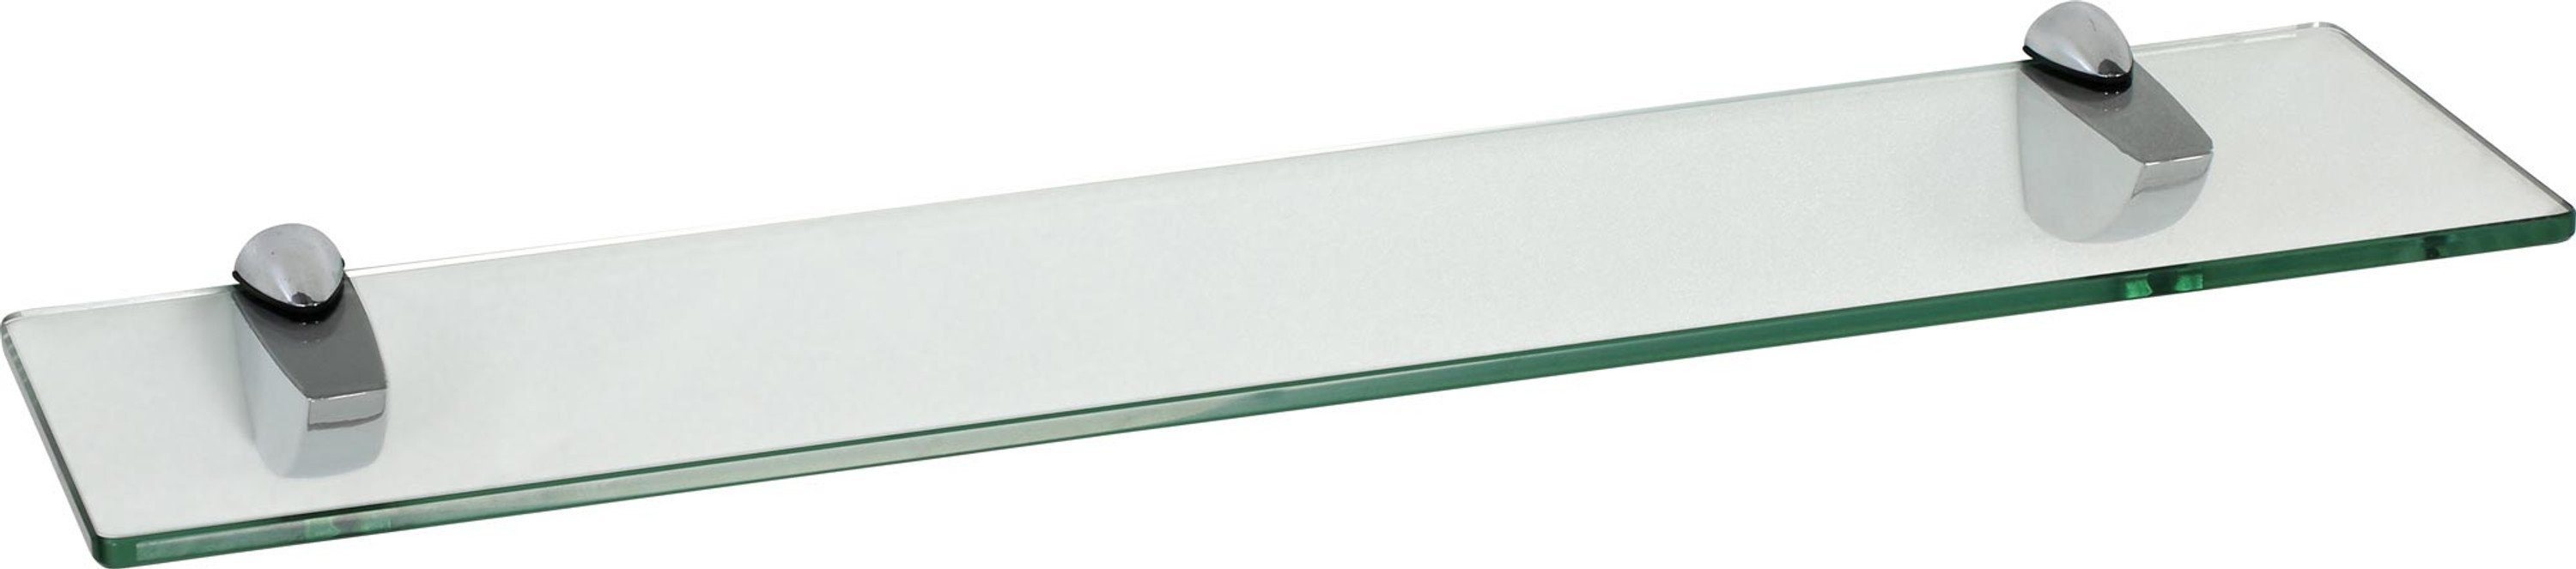 8mm - 15 cm klar PELI Verchromt, aus ib Clip x Glasregal eckig style Glasboden Wandregal Wandregal ESG-Sicherheitsglas + 40